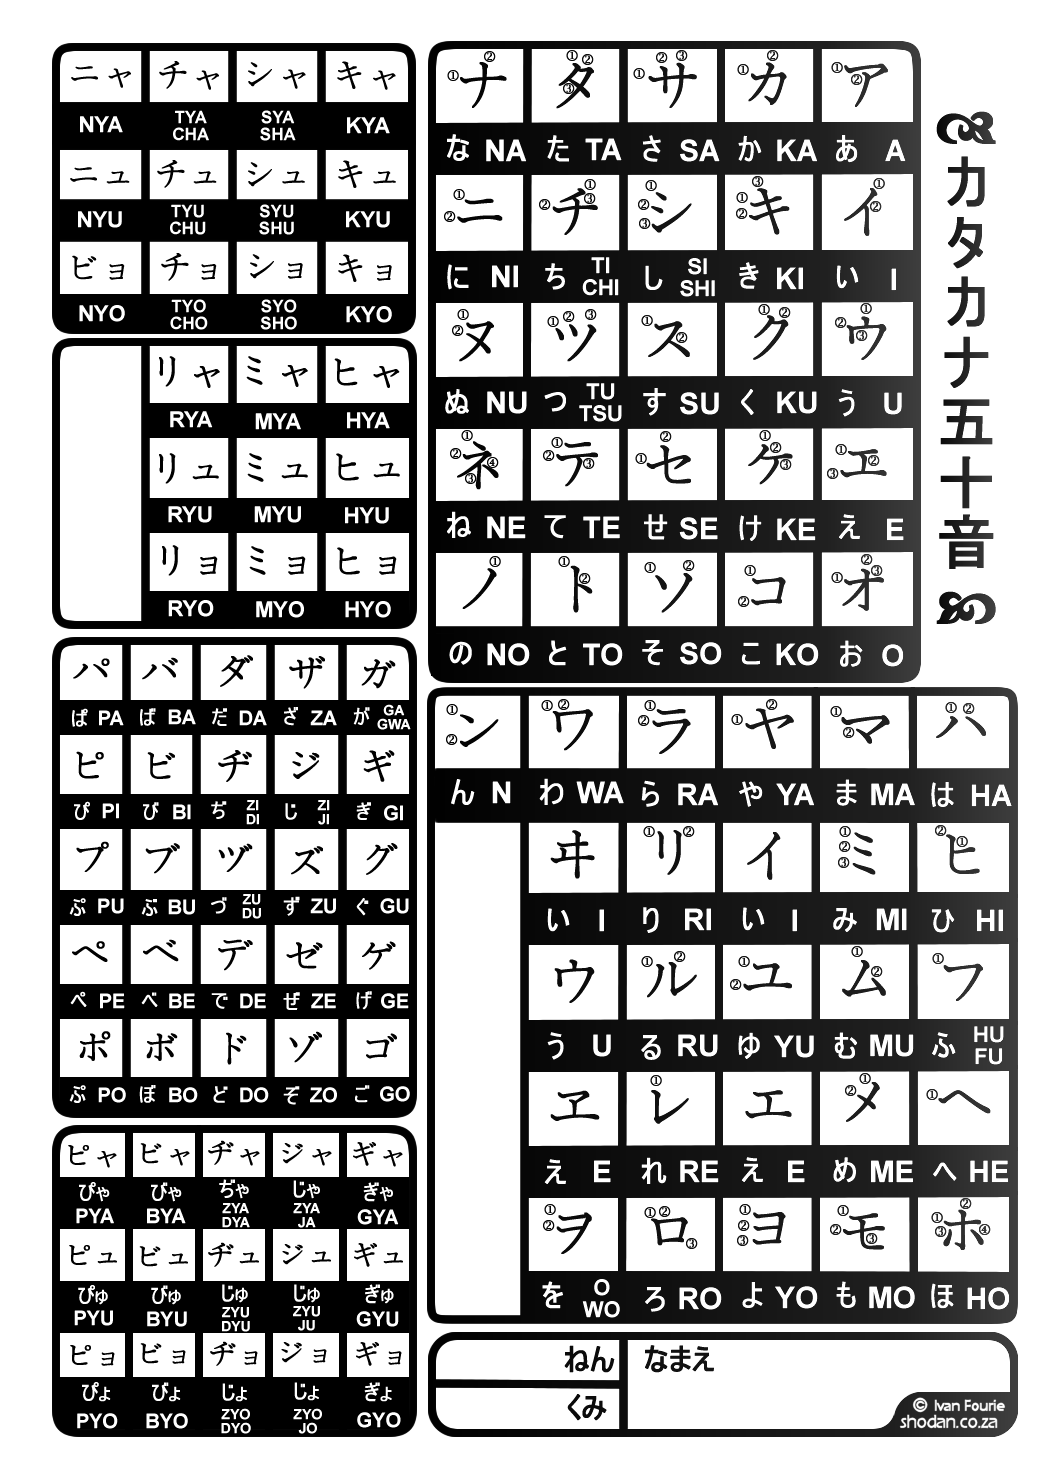 Belajar Bahasa Jepang Bagian 2 Huruf Katakana Kishi 